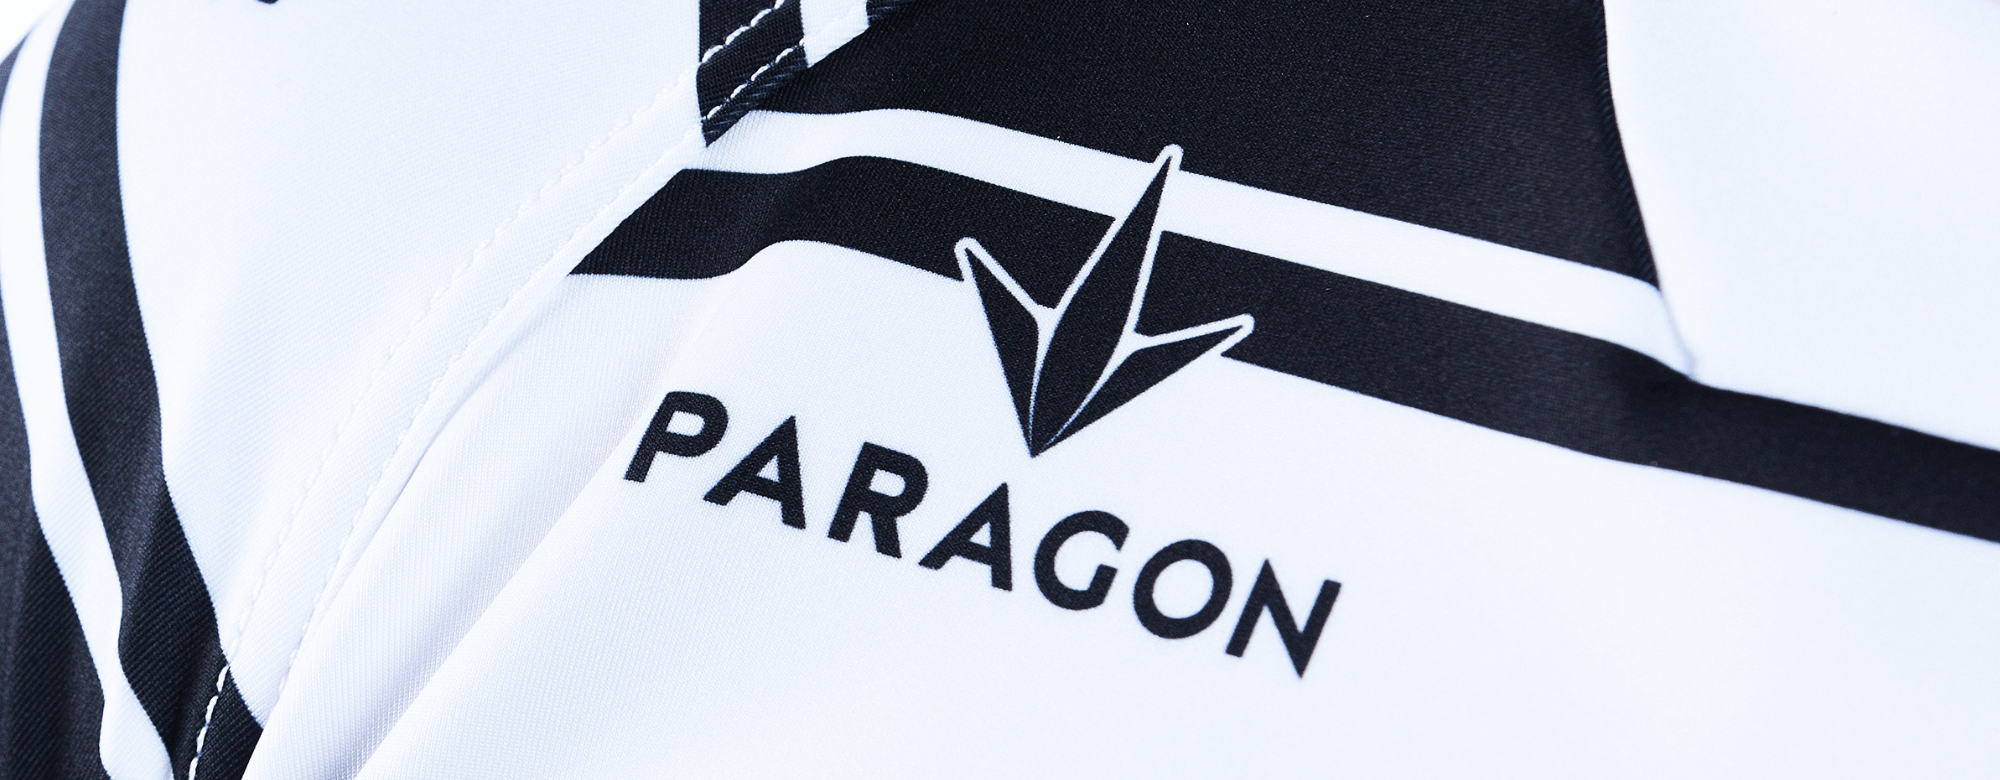 Sponsor In Focus: Paragon